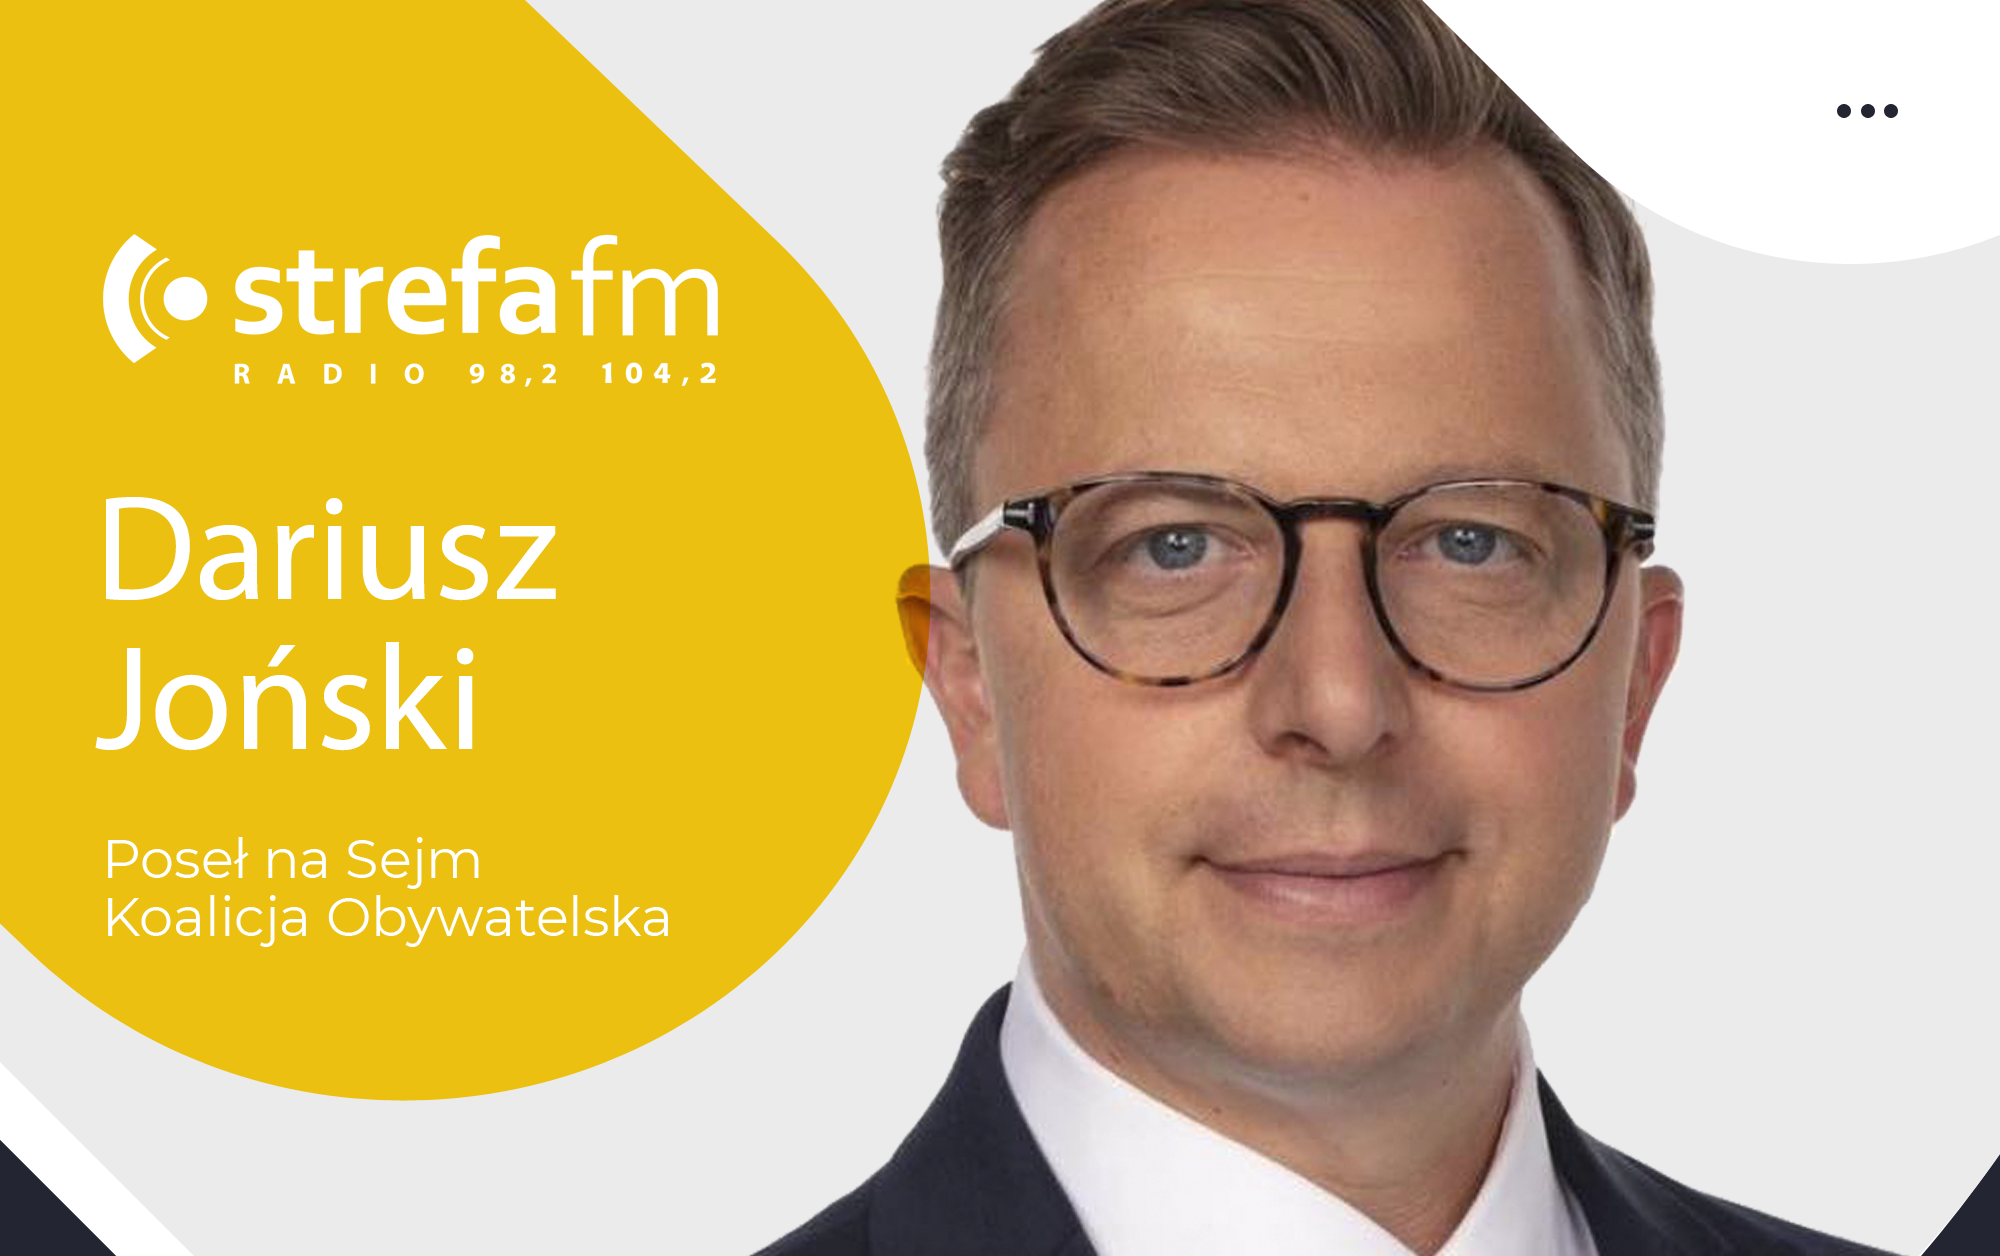 Dariusz Joński - poseł na sejm KO